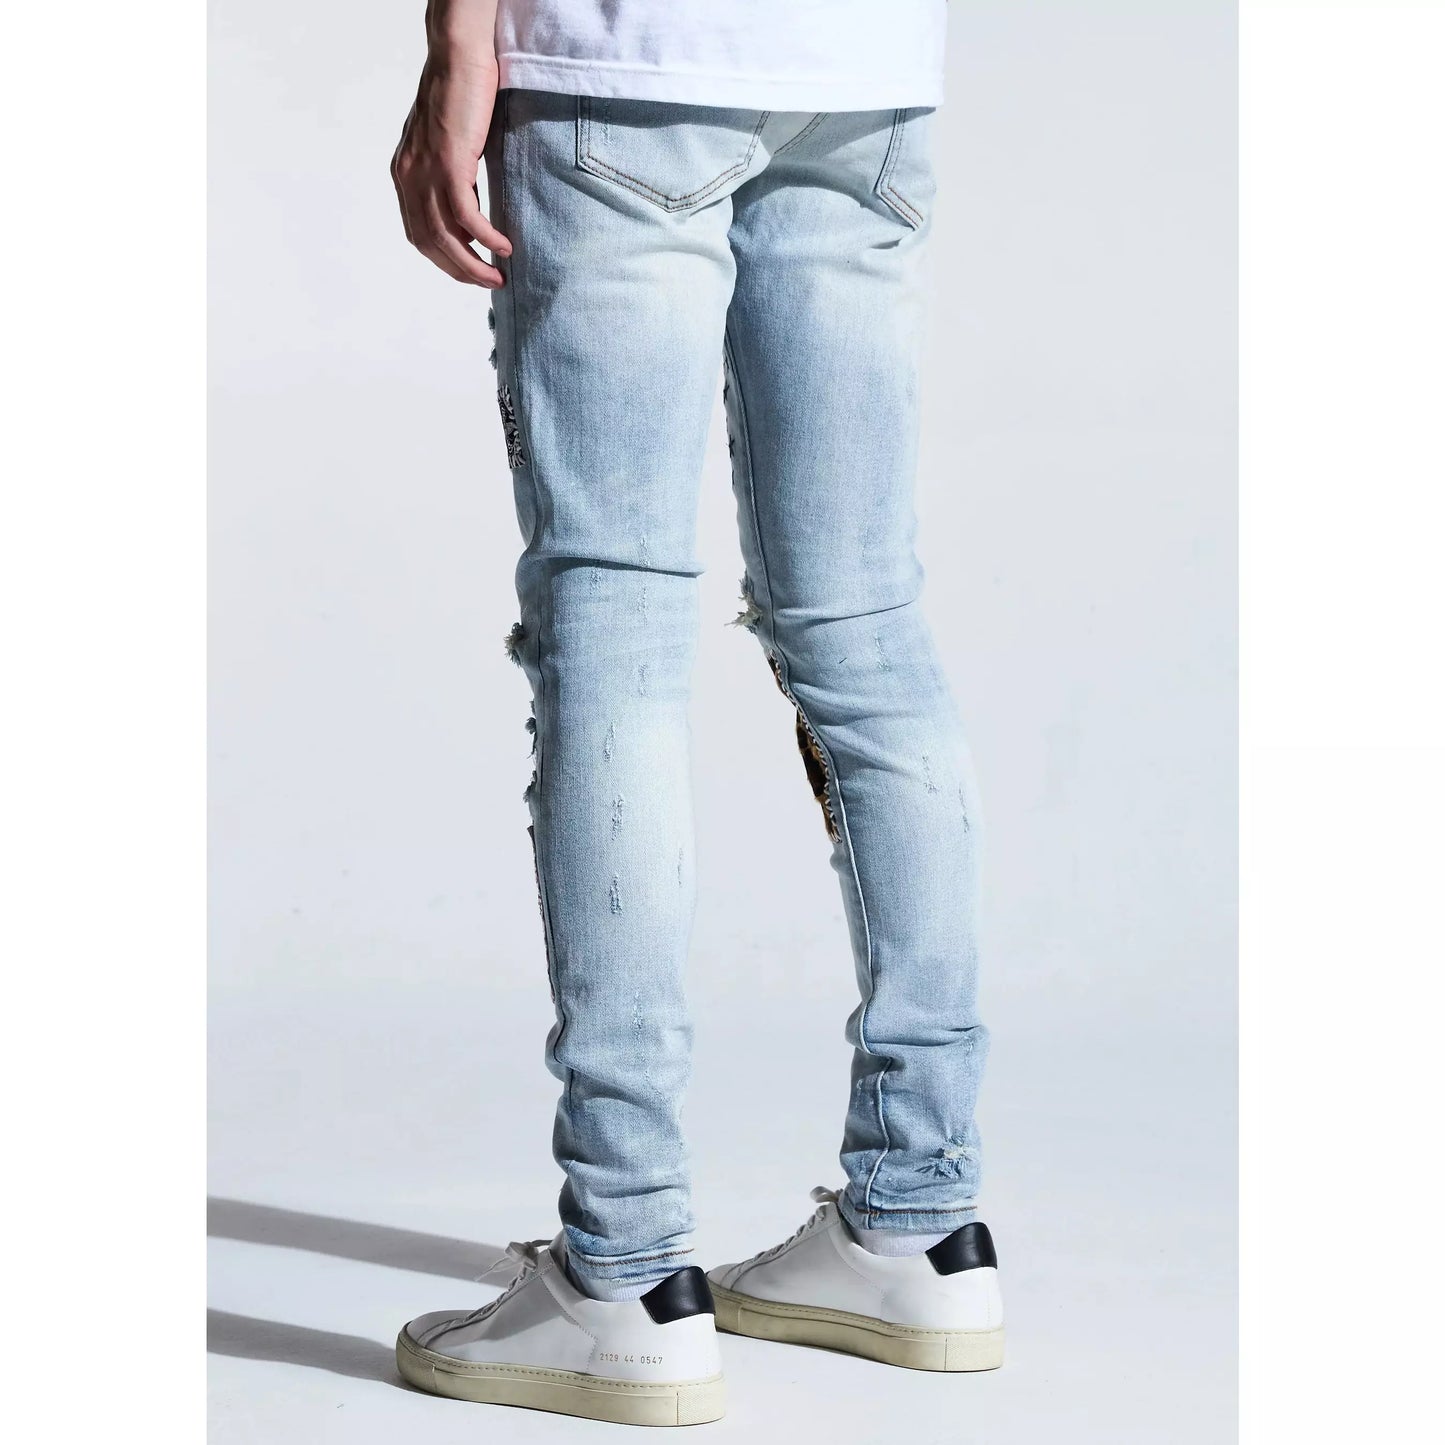 Embellish Light Blue Summit Patchwork Denim Jeans (EMBSUM20-118)